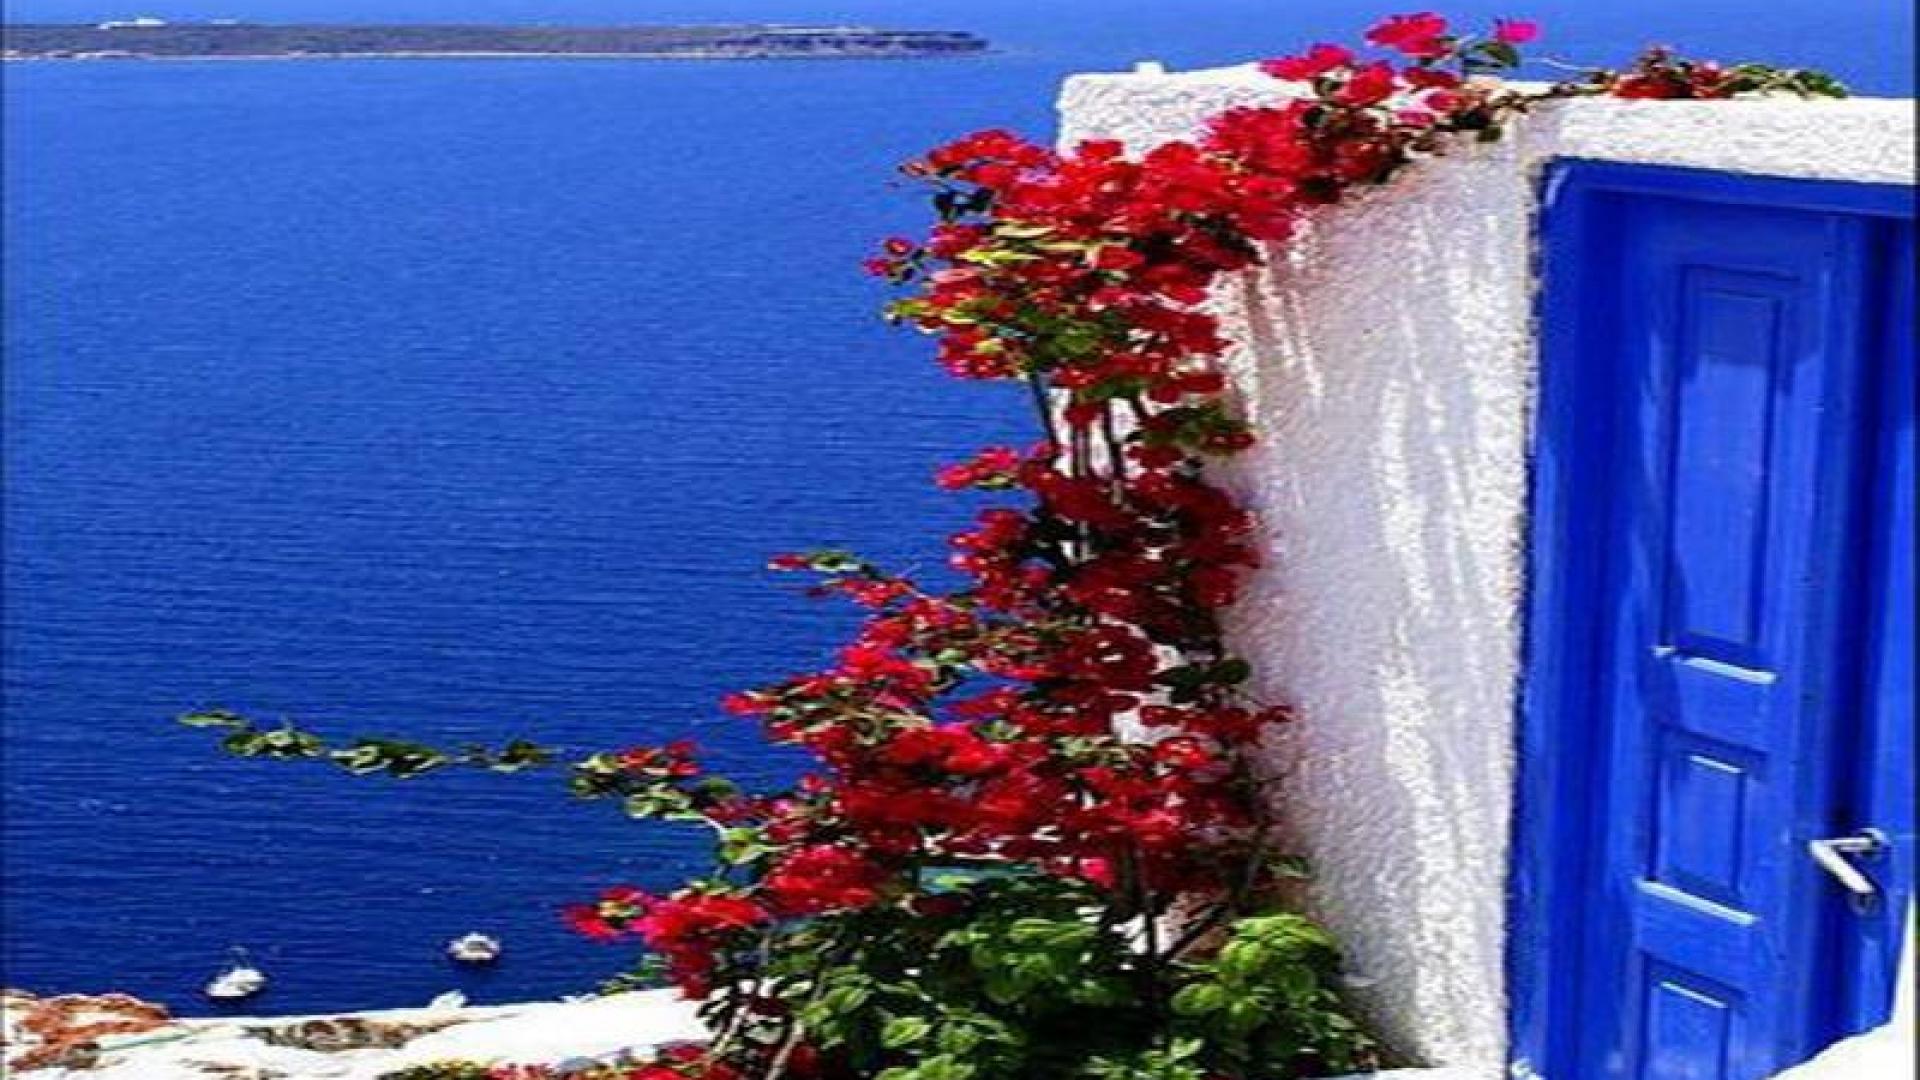 Santorini High Quality And Resolution Wallpaper On